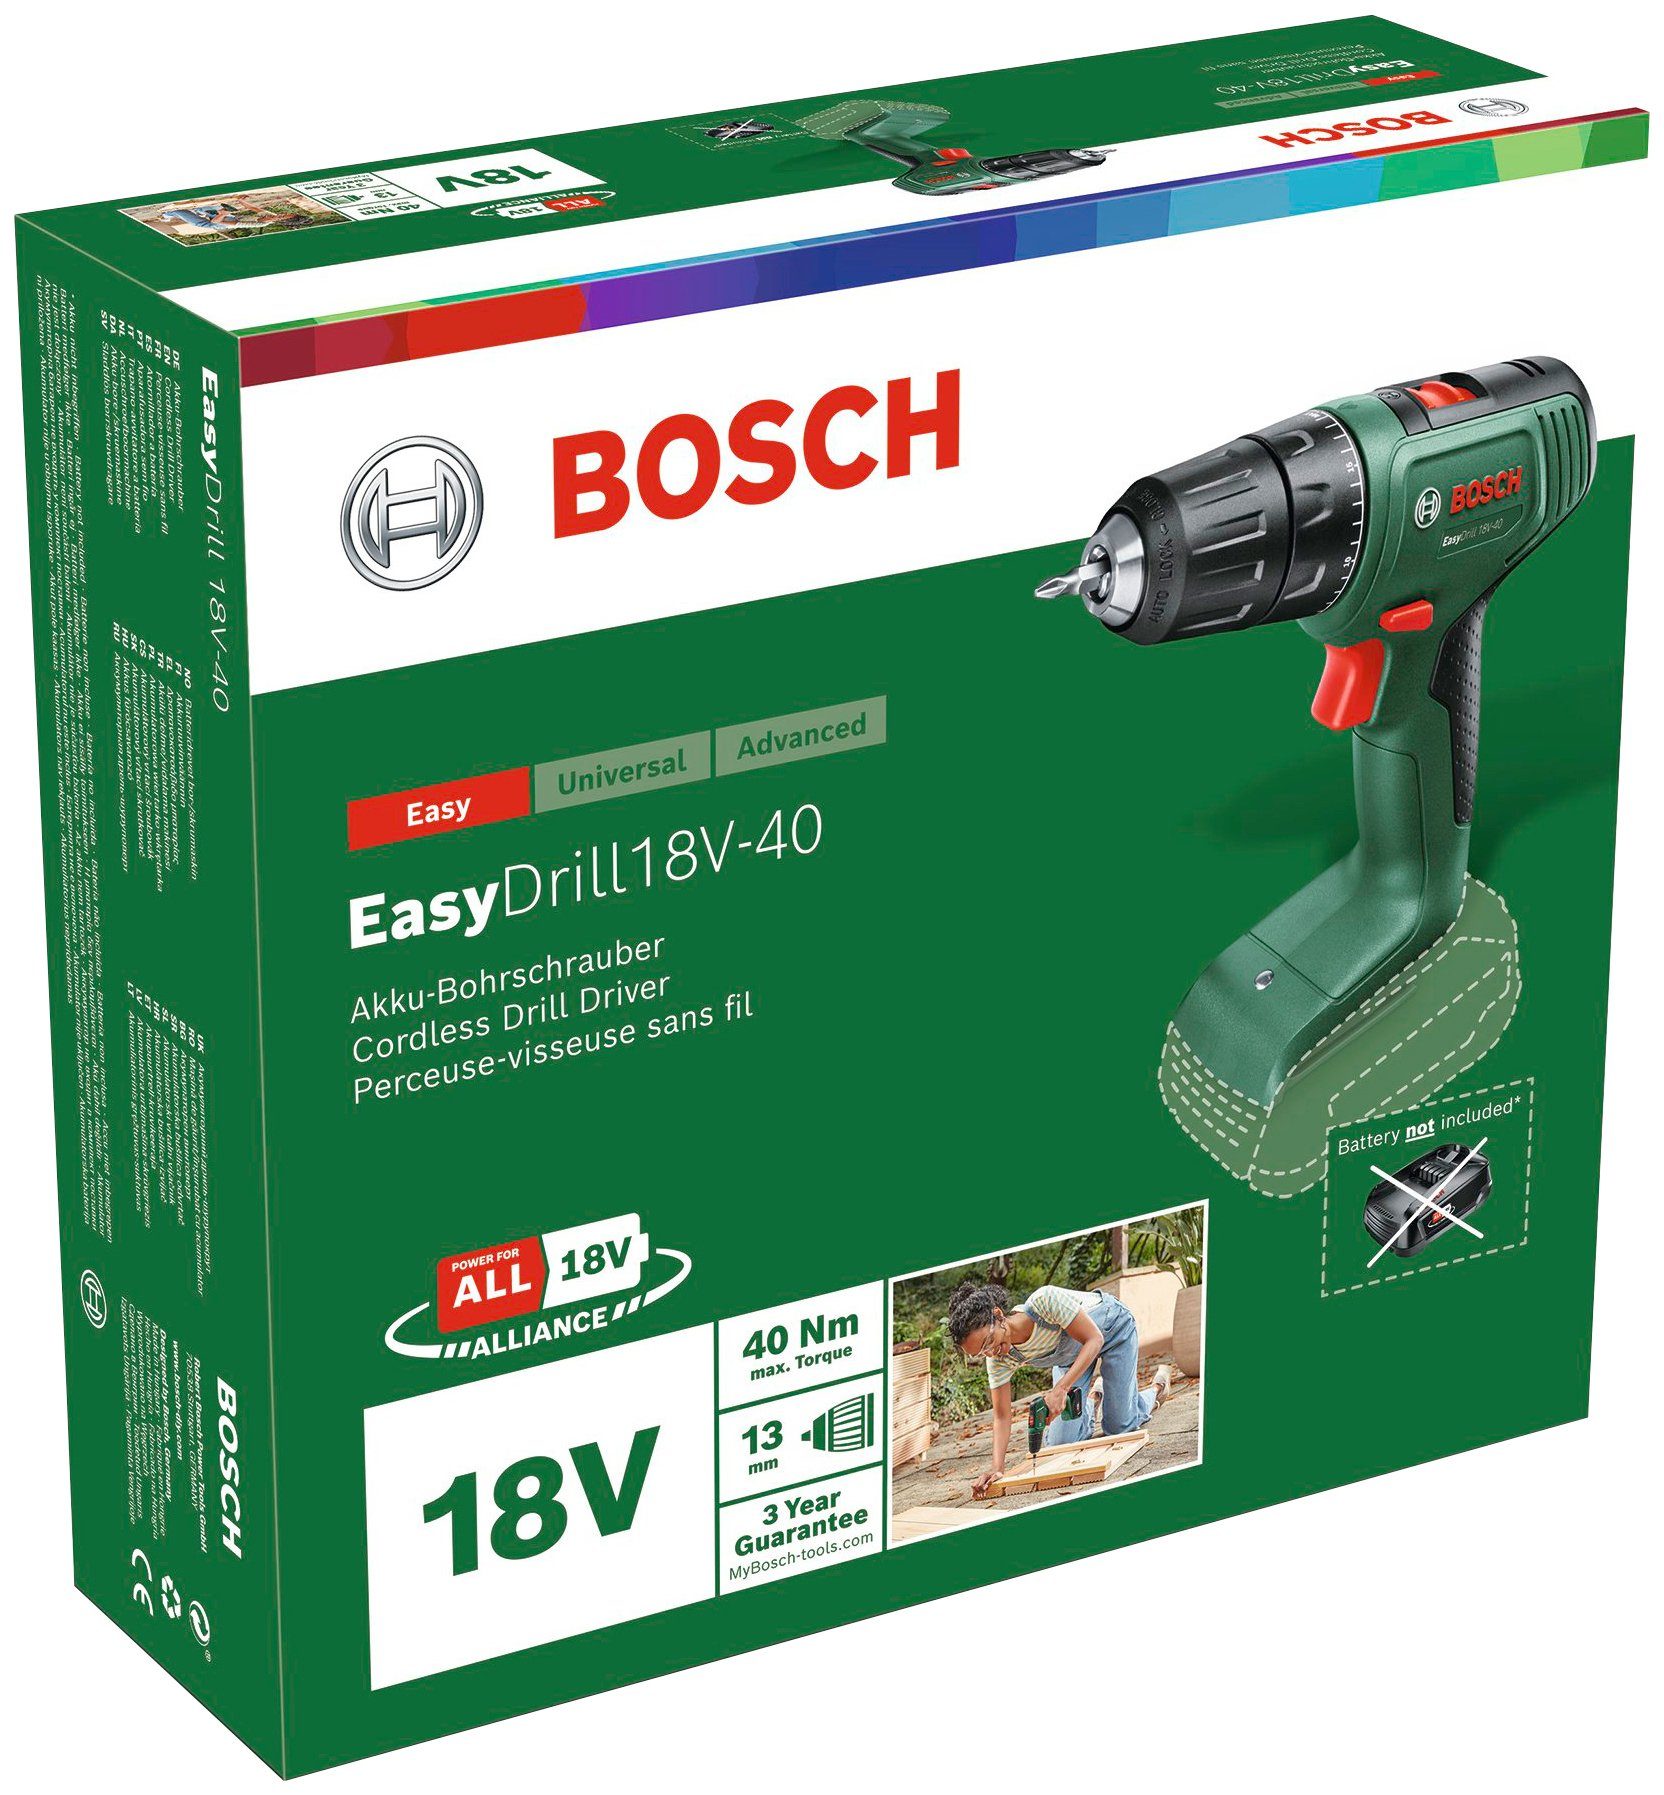 und Akku-Bohrschrauber Bosch ohne Volt System Home Ladegerät, Easydrill 18 Akku 18V-40, & Garden